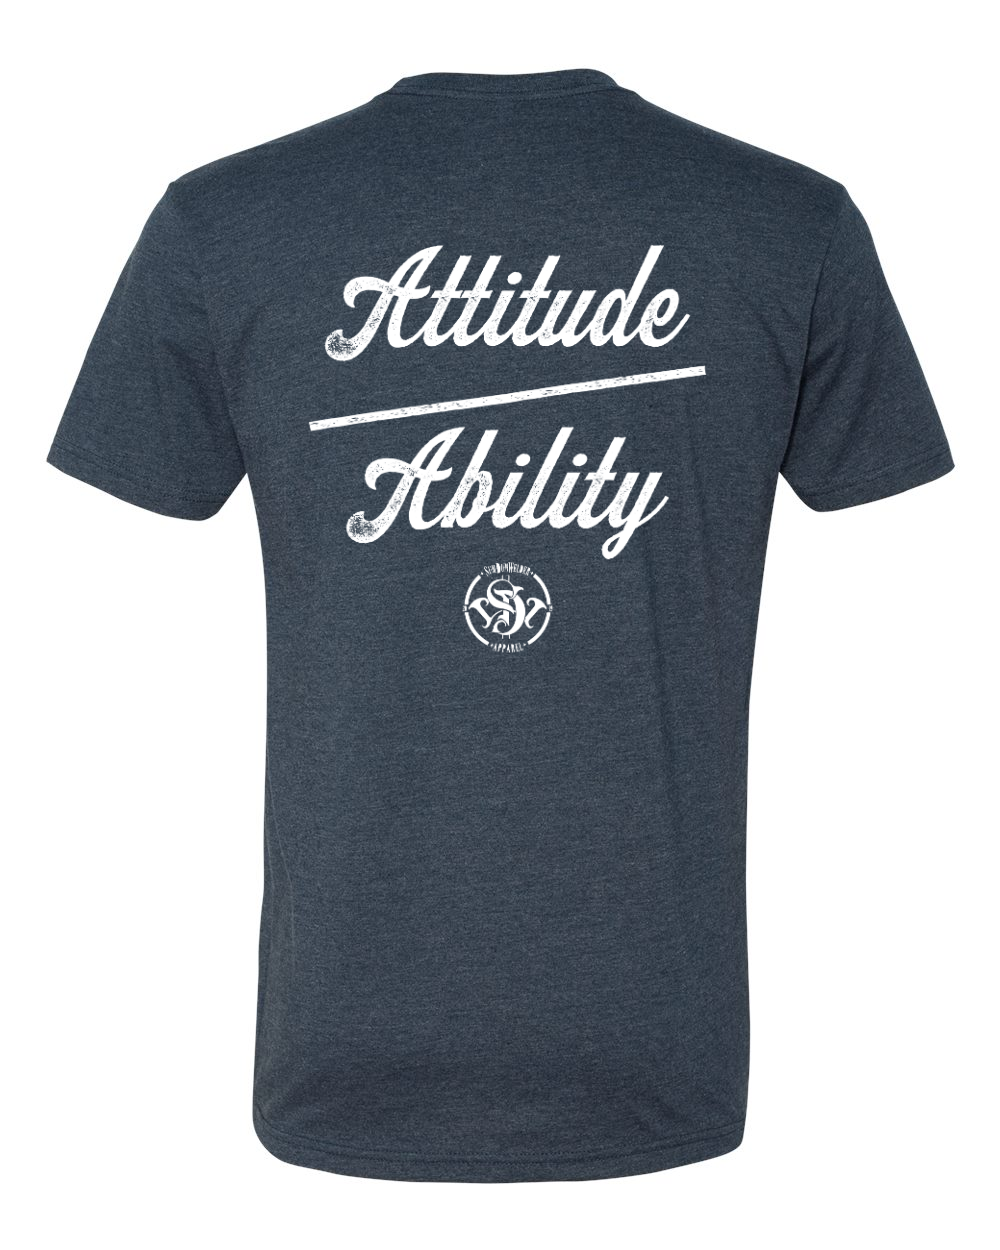 Attitude Over Ability FB - Old School SDW FF - White logo